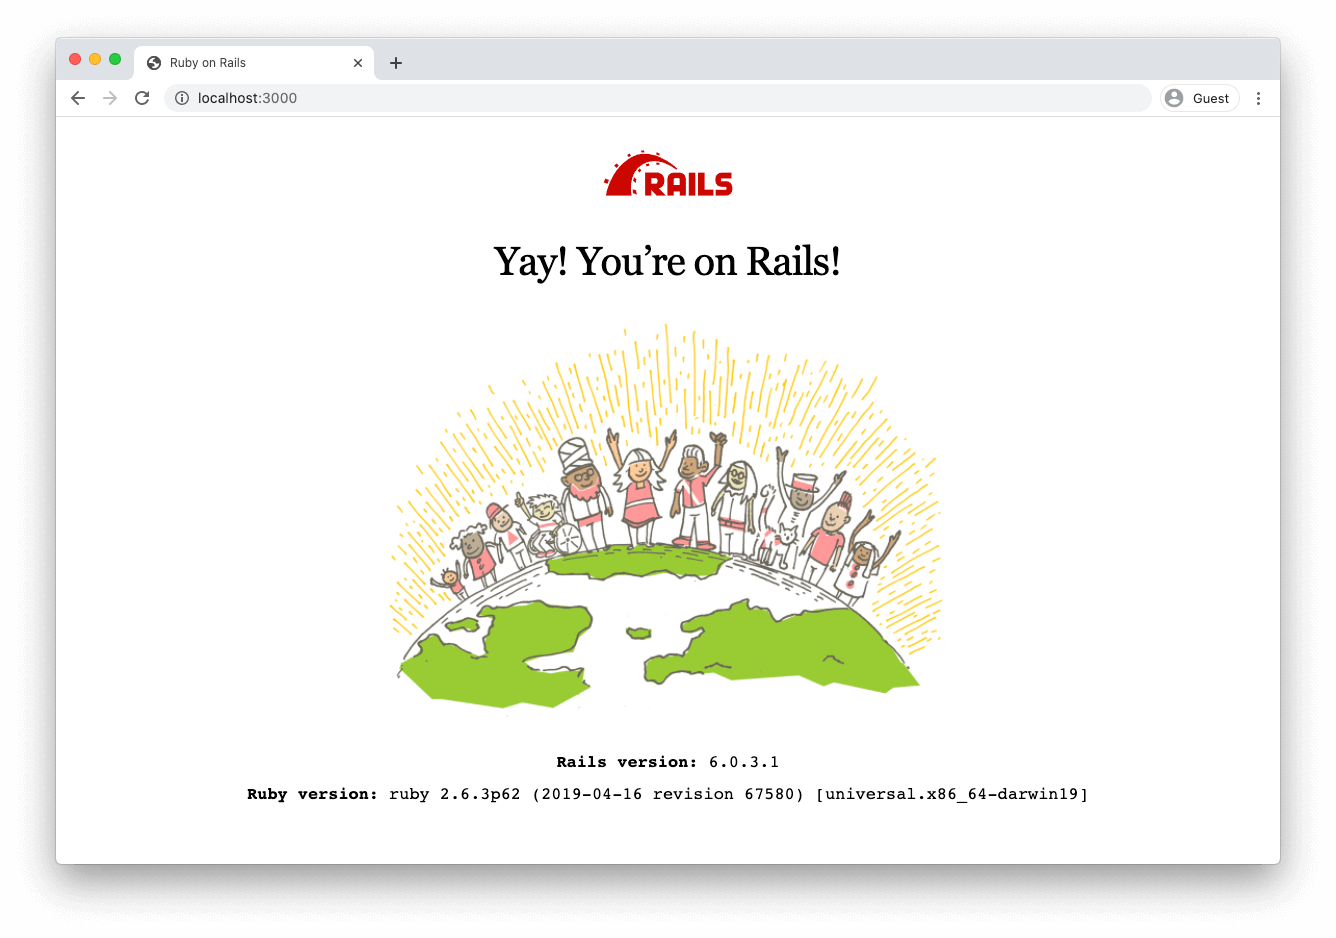 Rails greeting screen